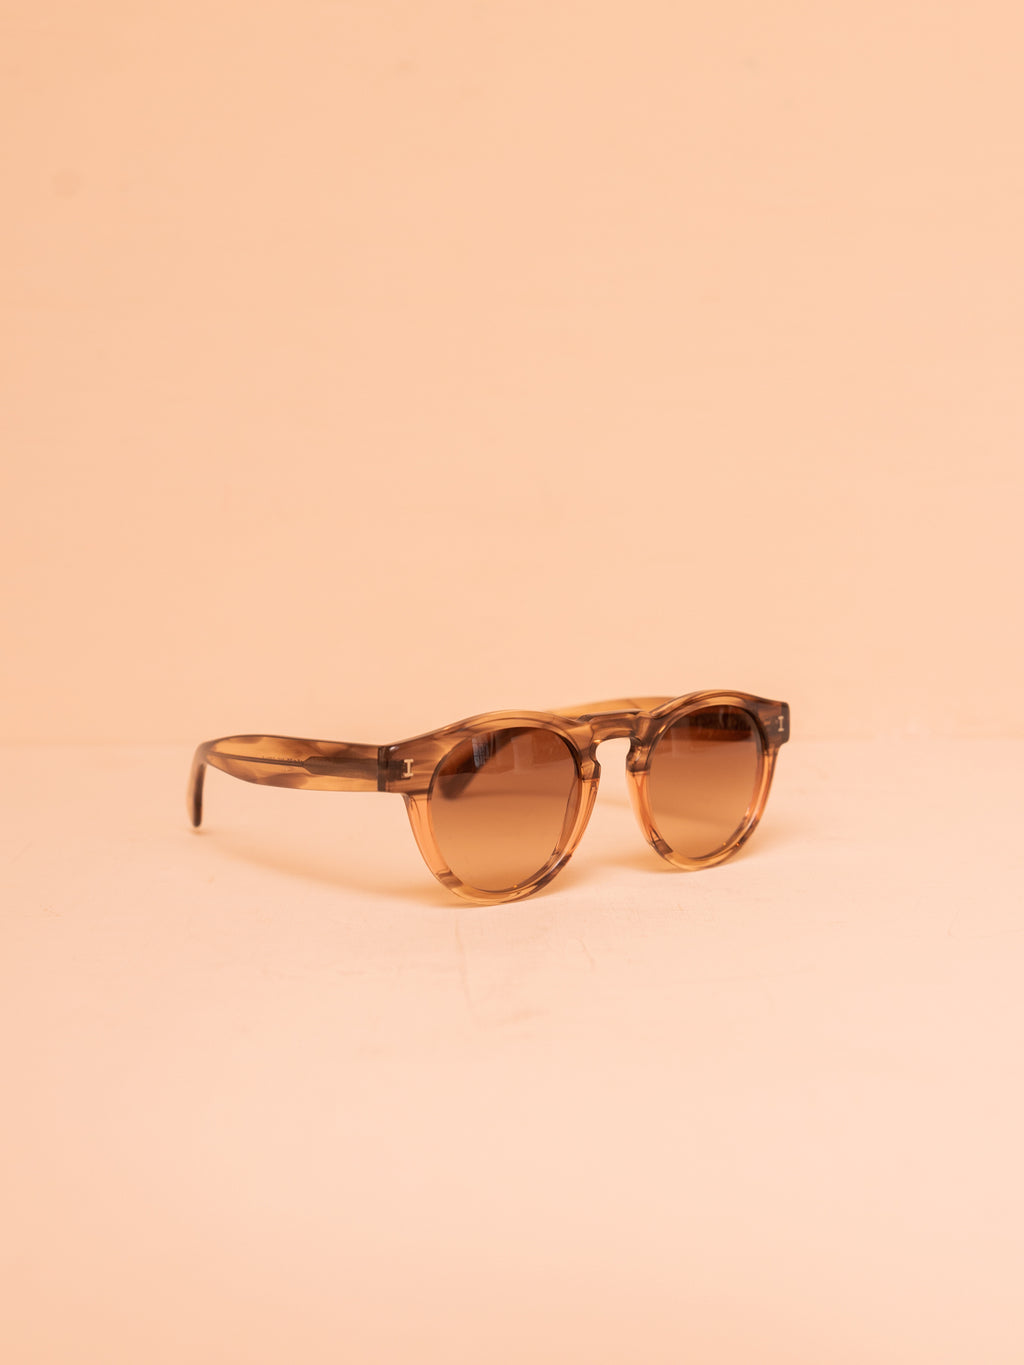 Leonard Sunglasses in Dusty Peach